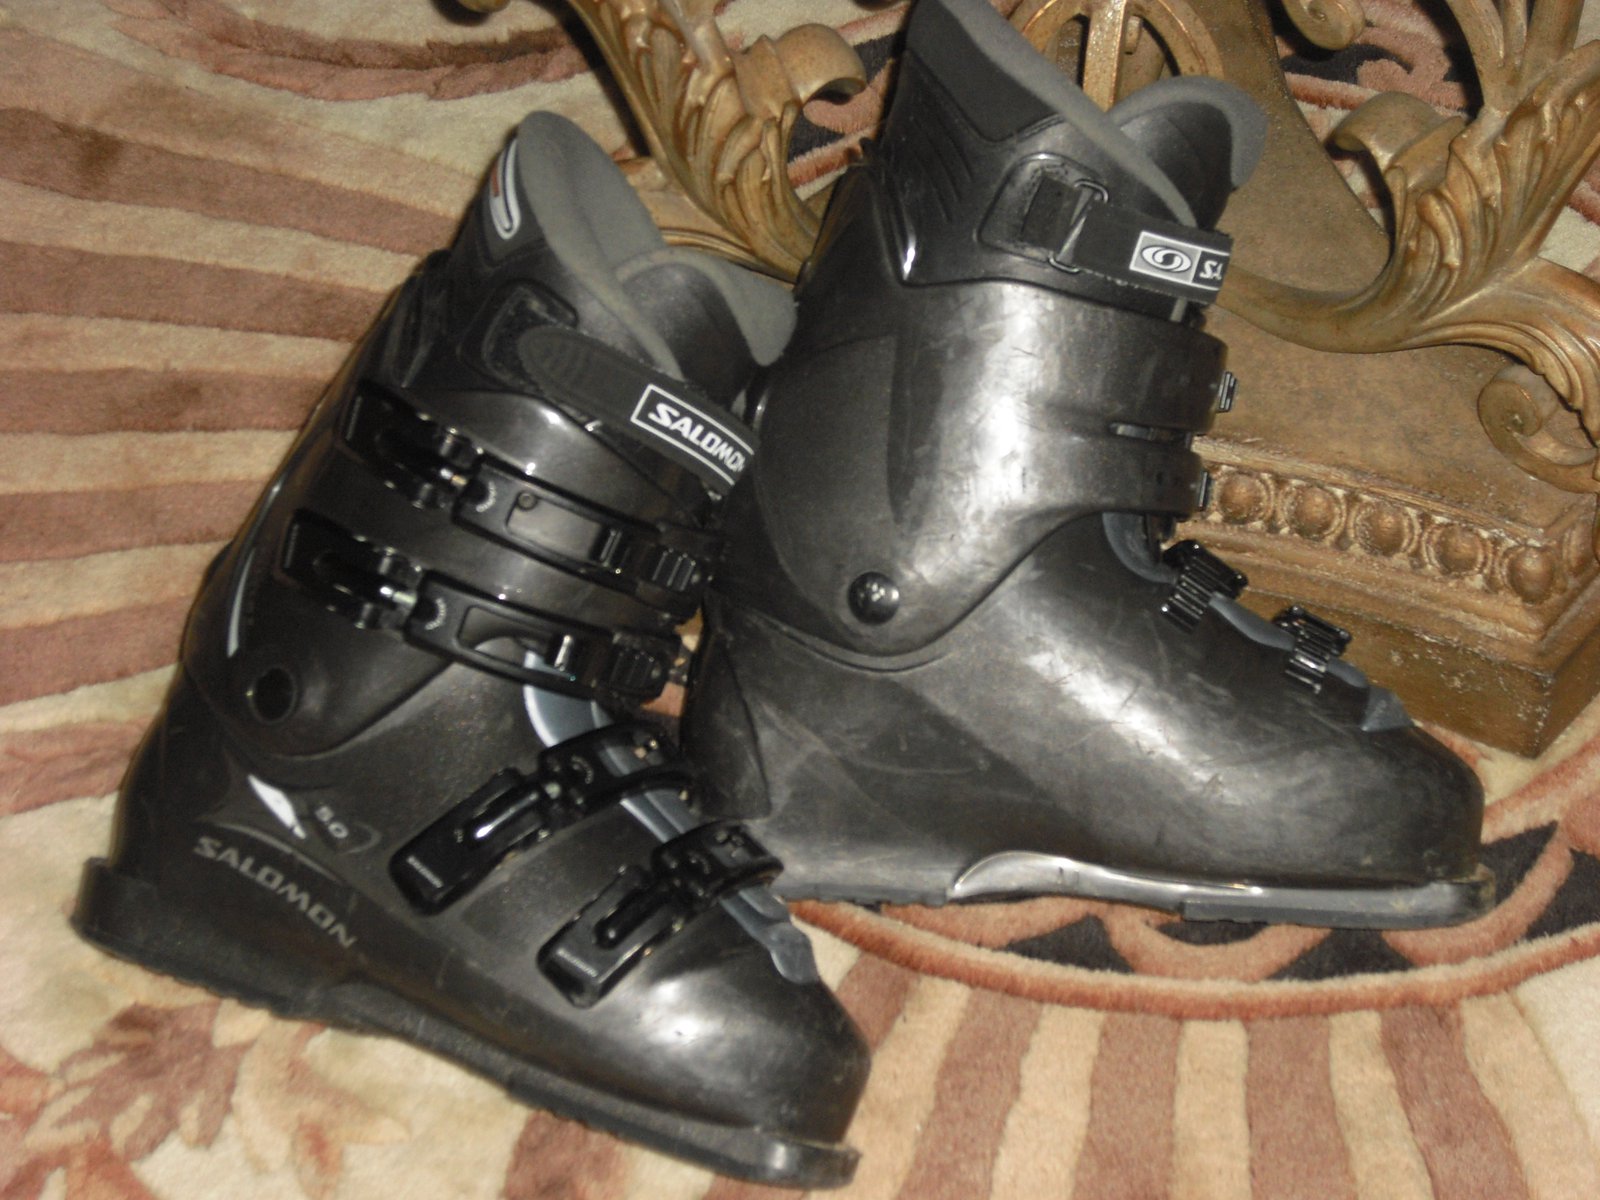 Sick salomon boots really cheap size 26.5